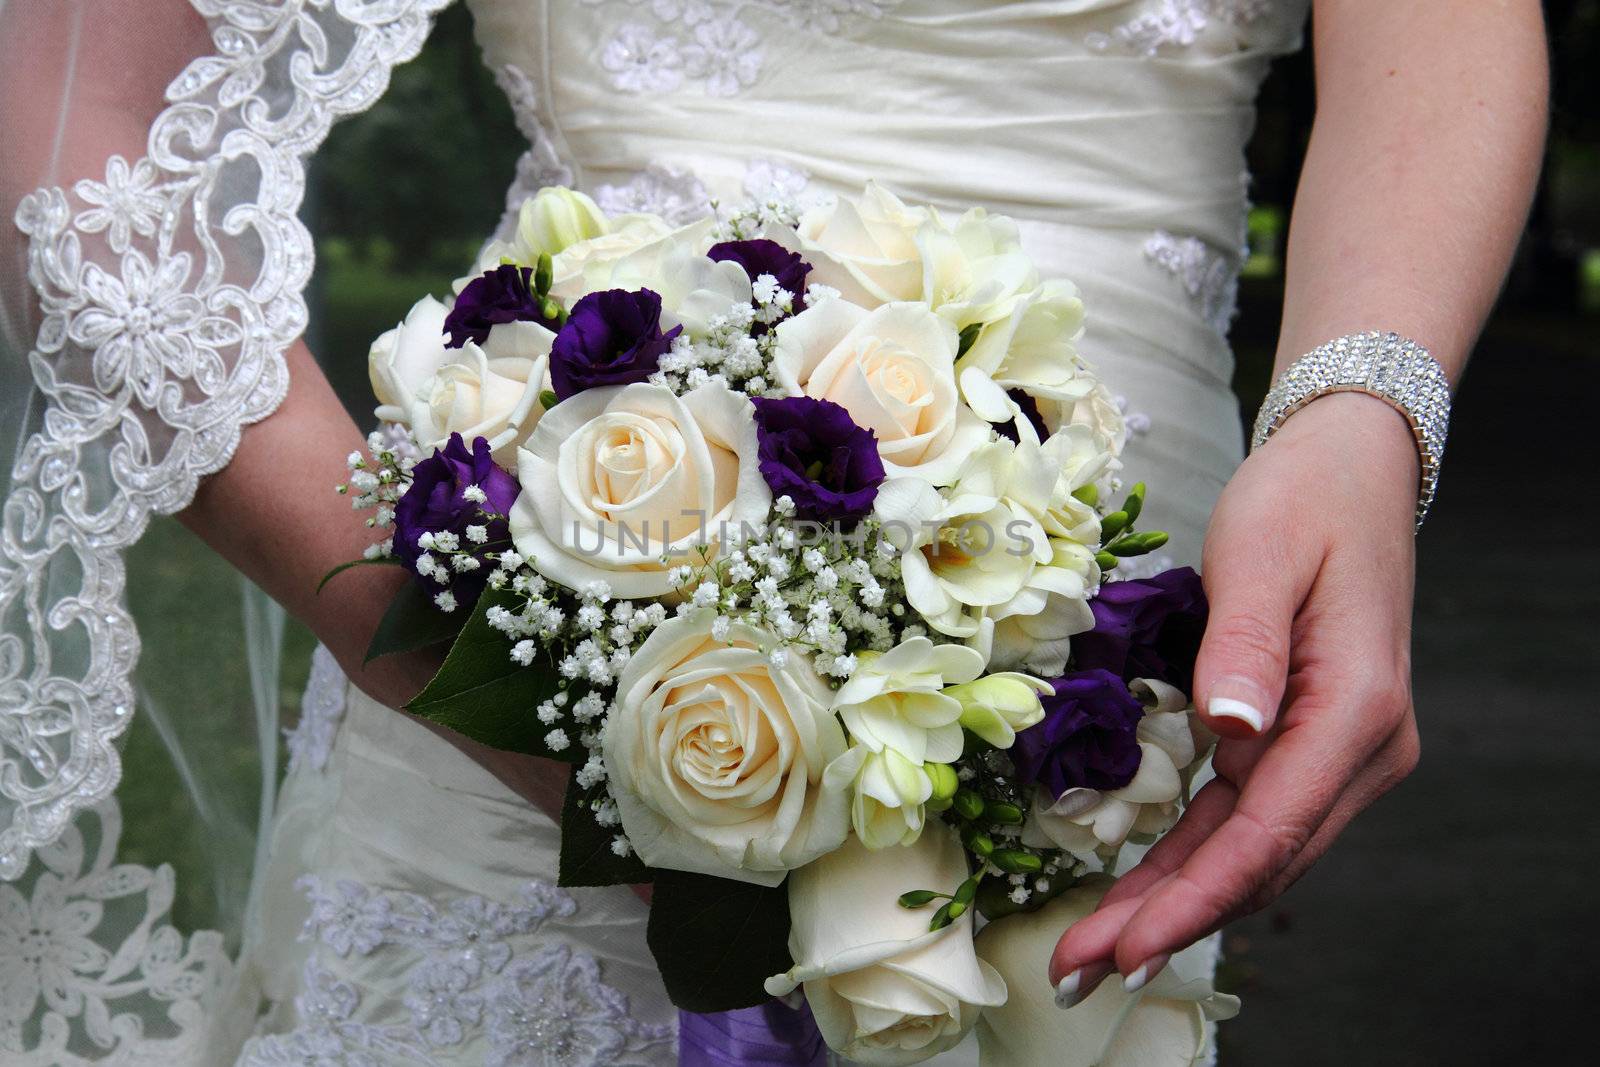 wedding flower background  by jonnysek